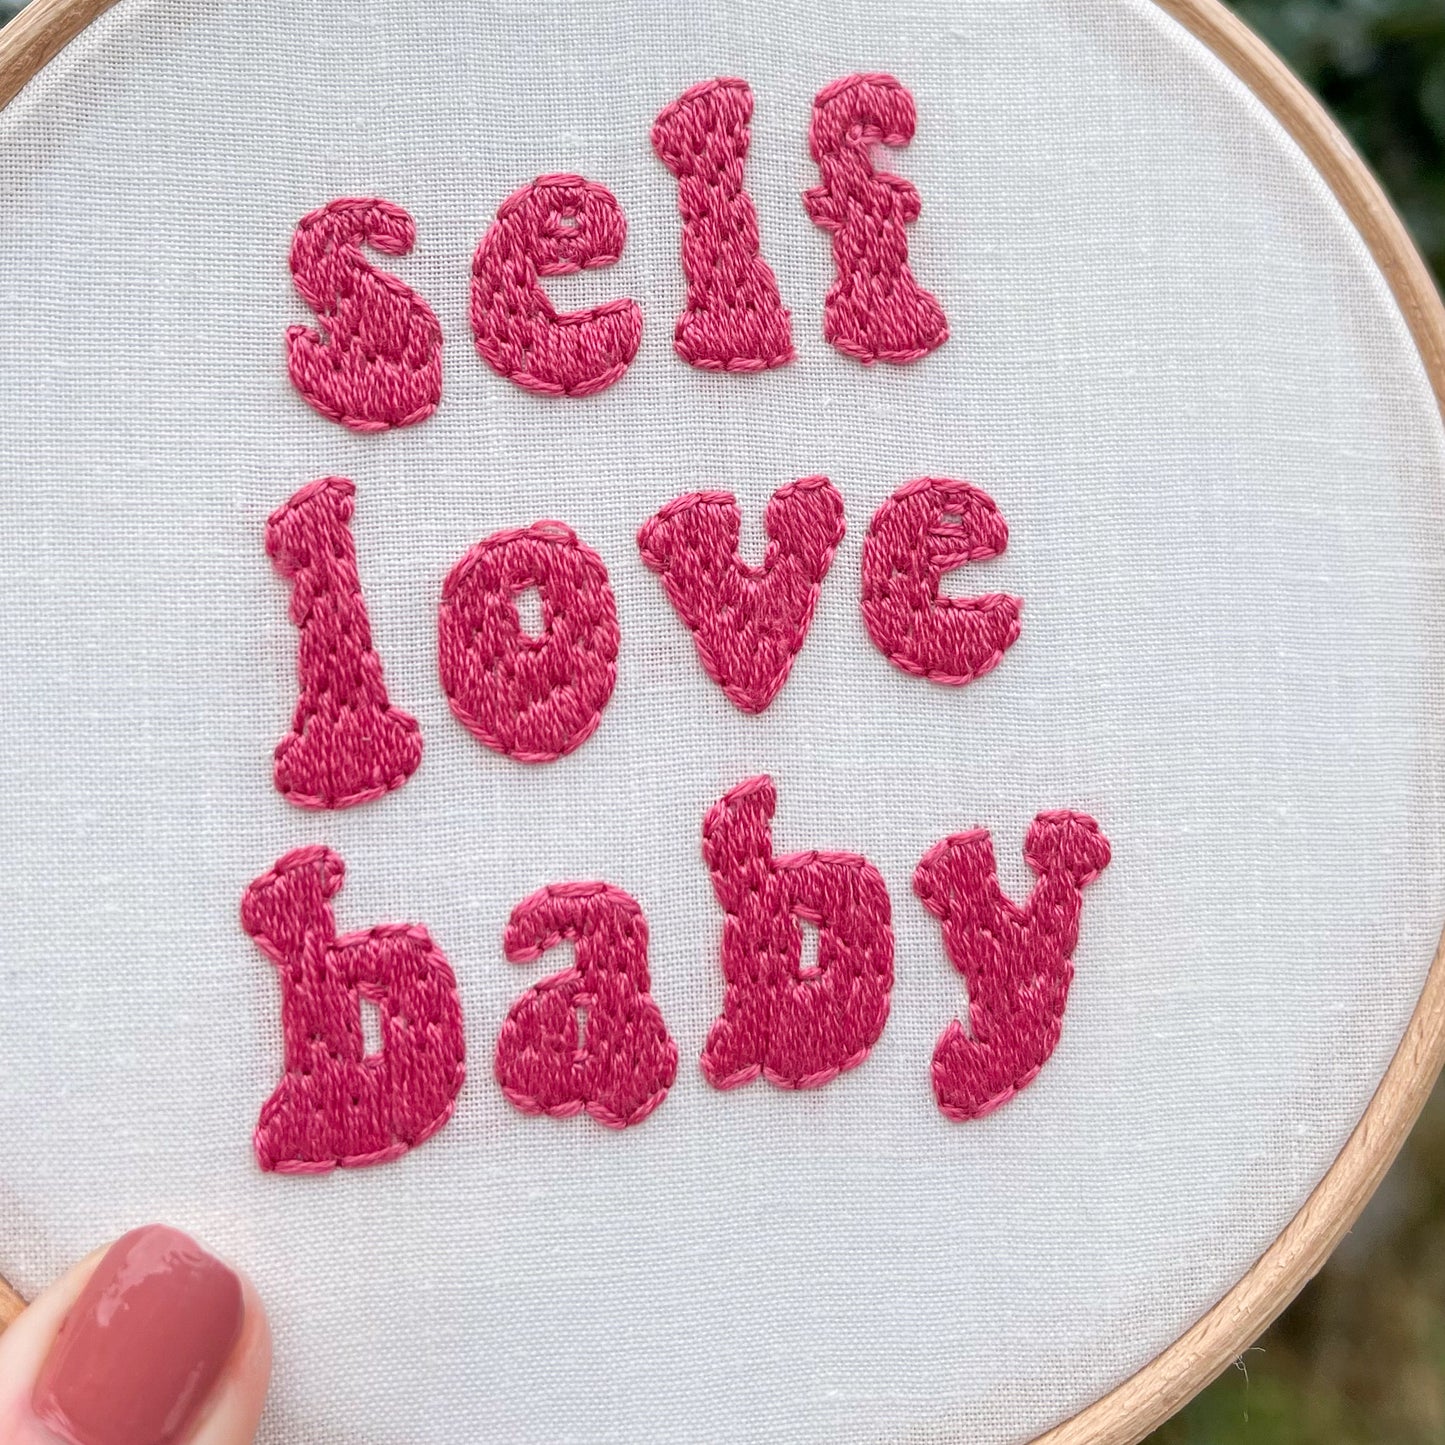 Self Love Baby Hand Embroidery Hoop